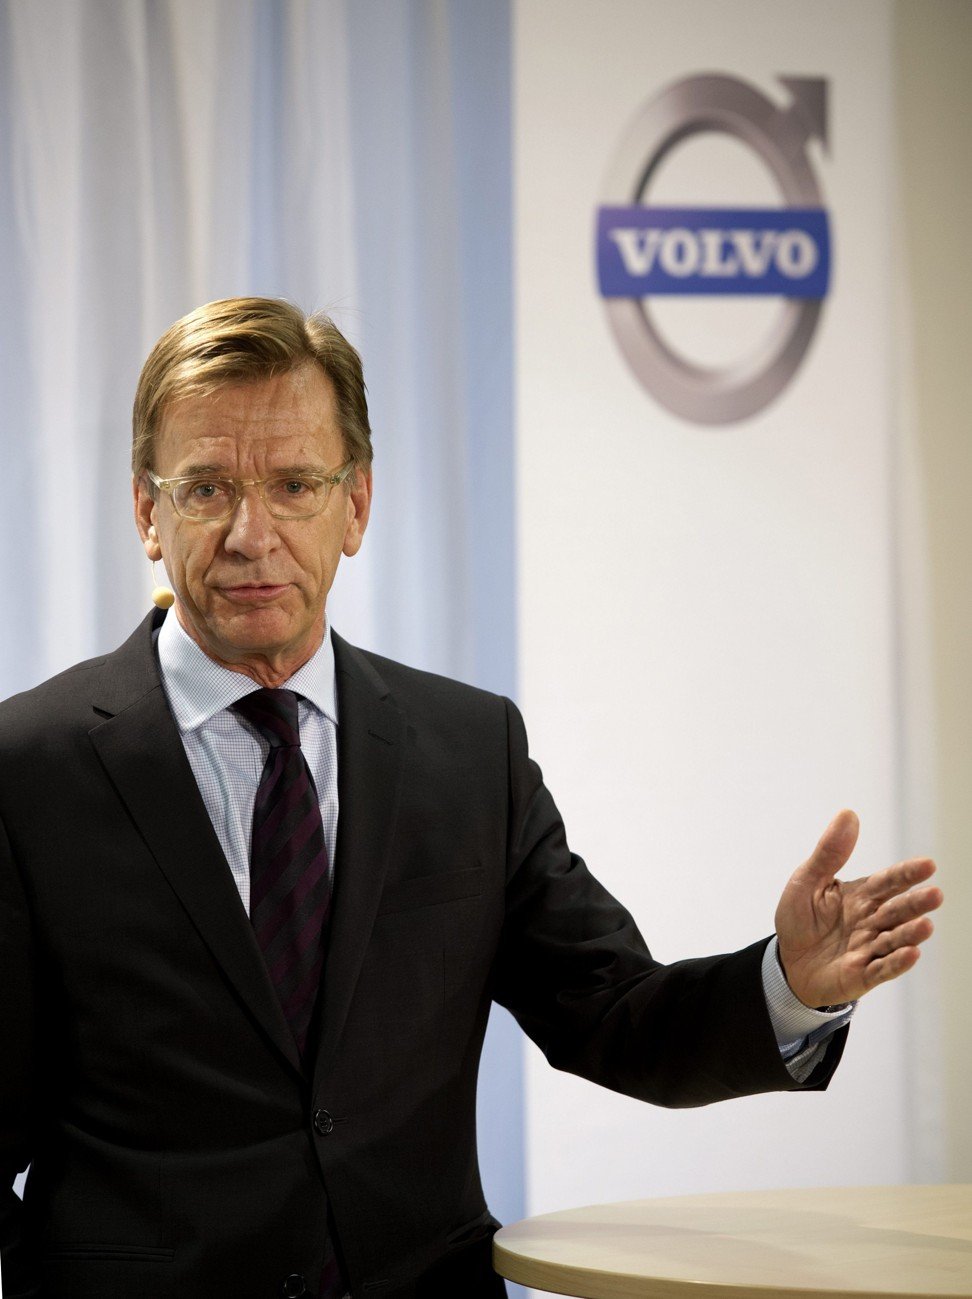 Hakan Samuelsson, chief executive of Volvo Cars. Photo: AFP